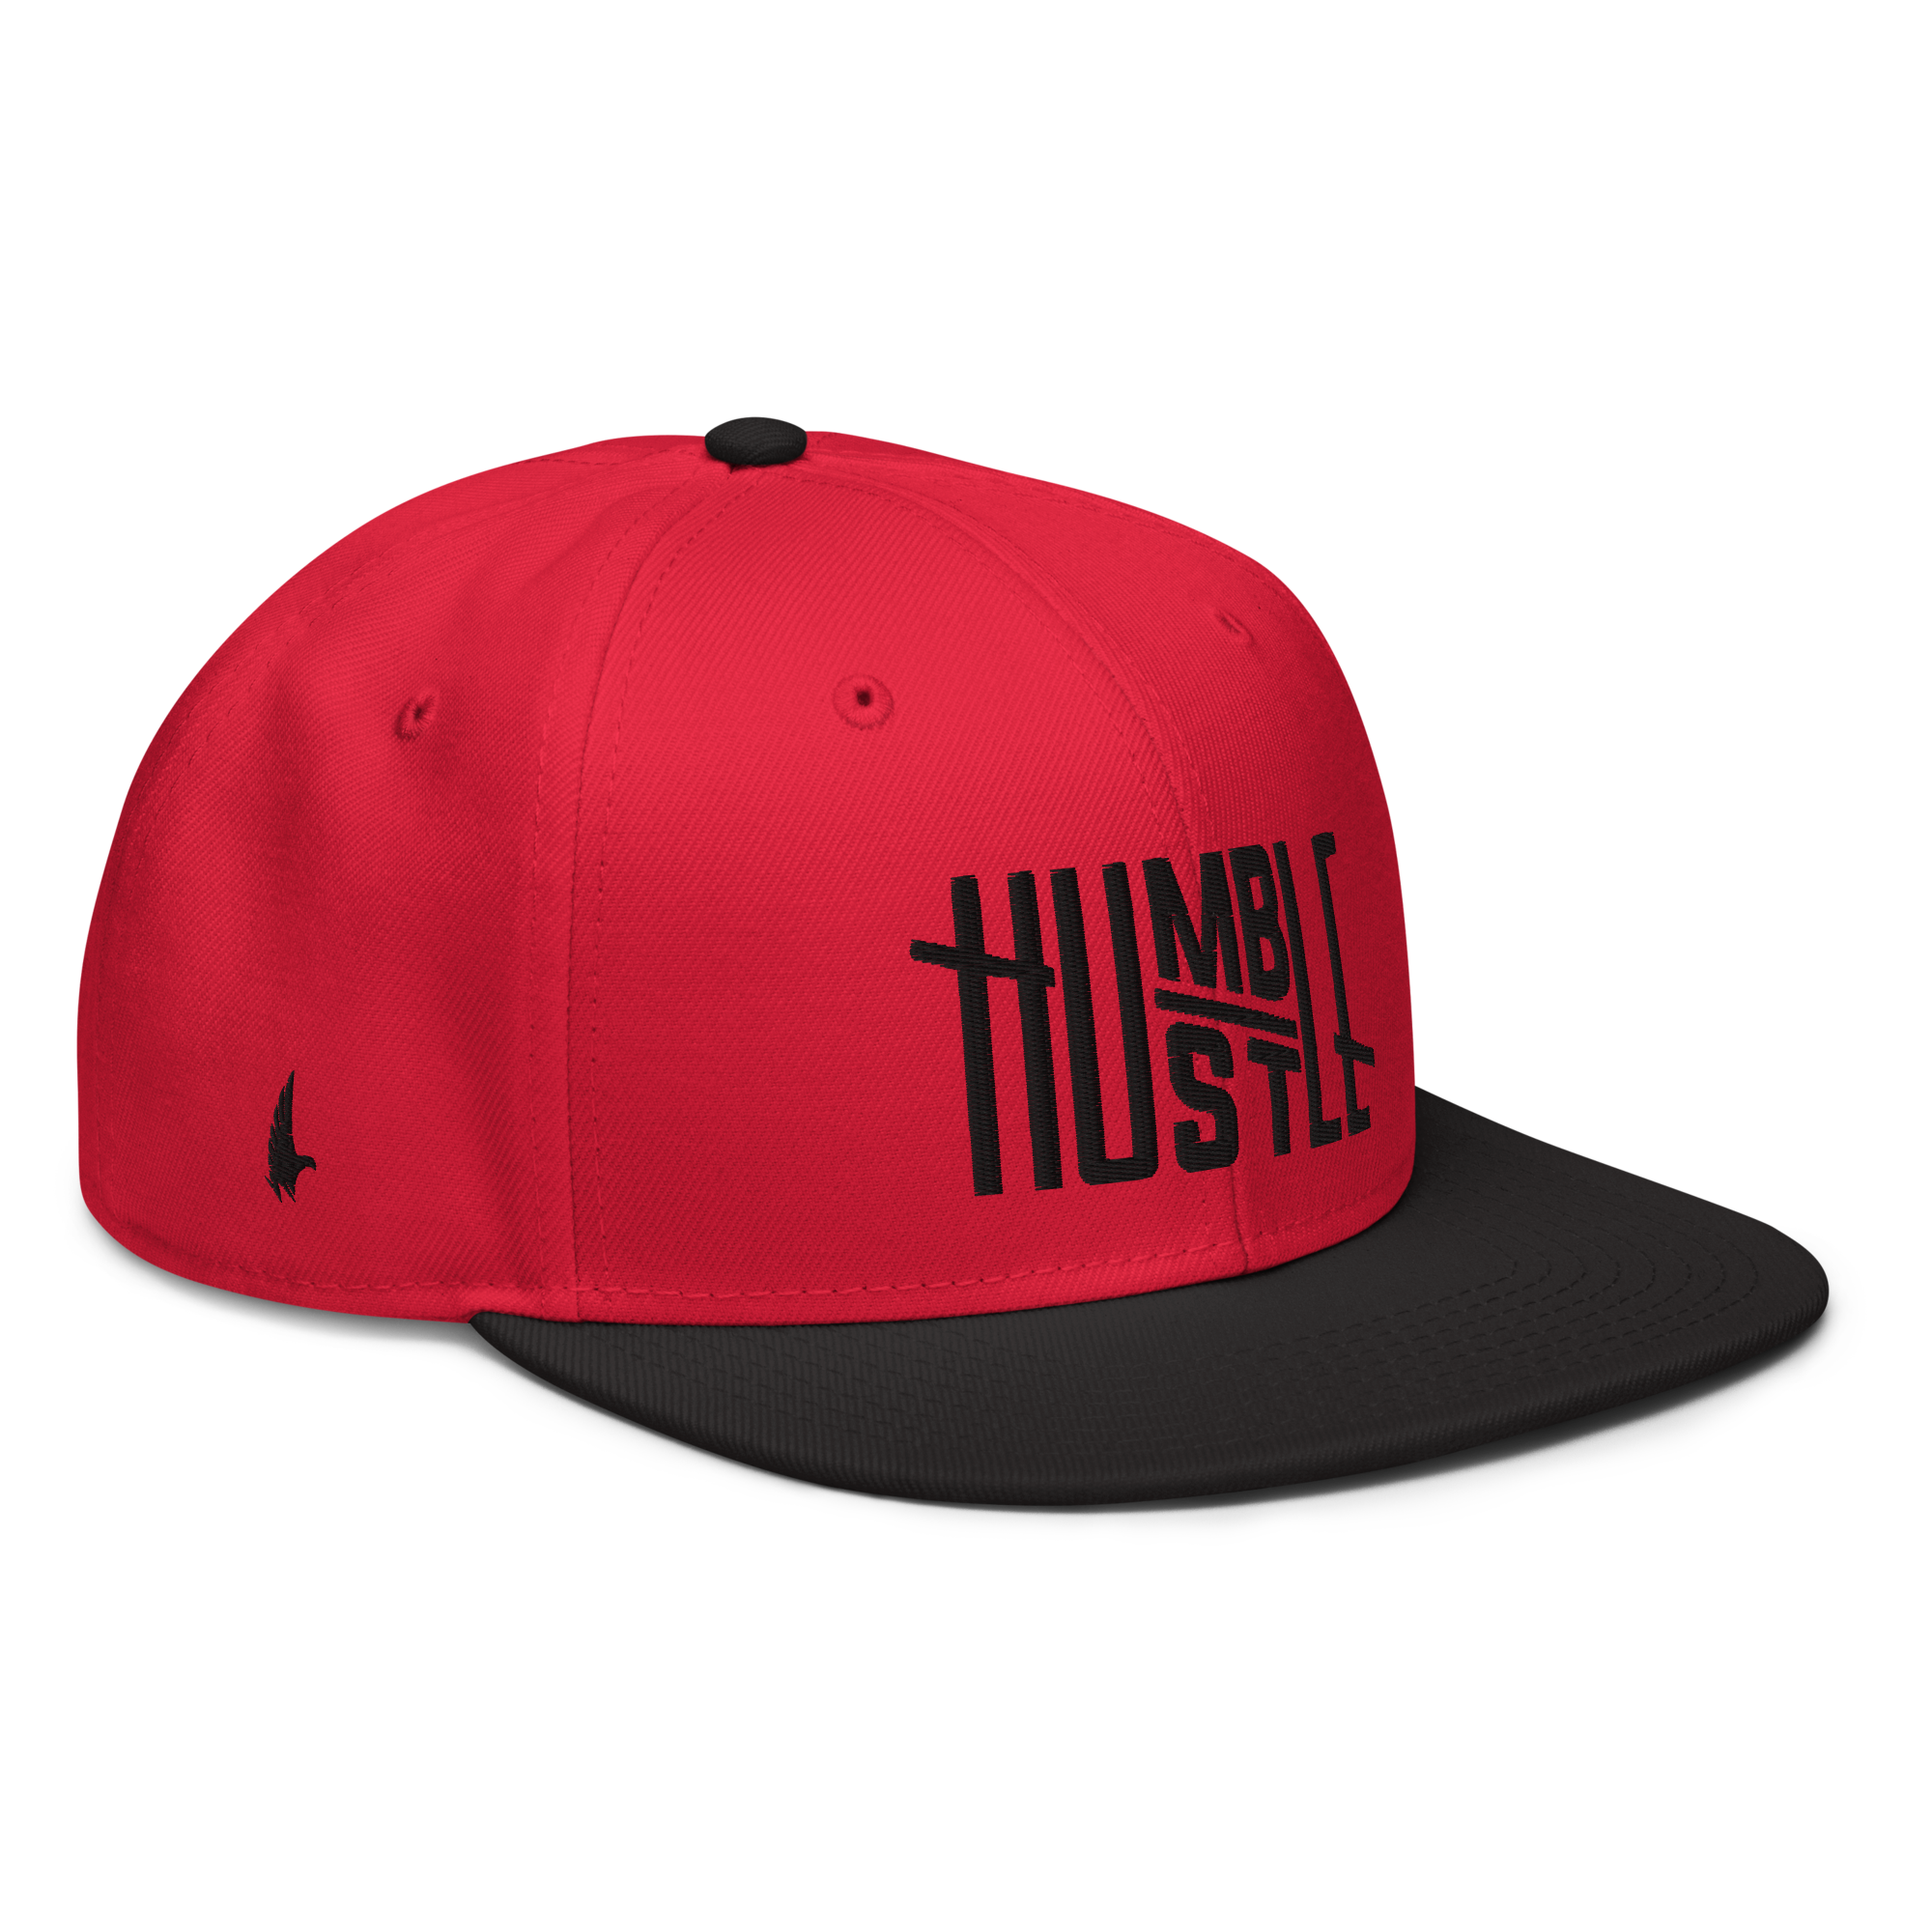 Humble Hustle Snapback Hat - Red/Black/Black OS - Loyalty Vibes